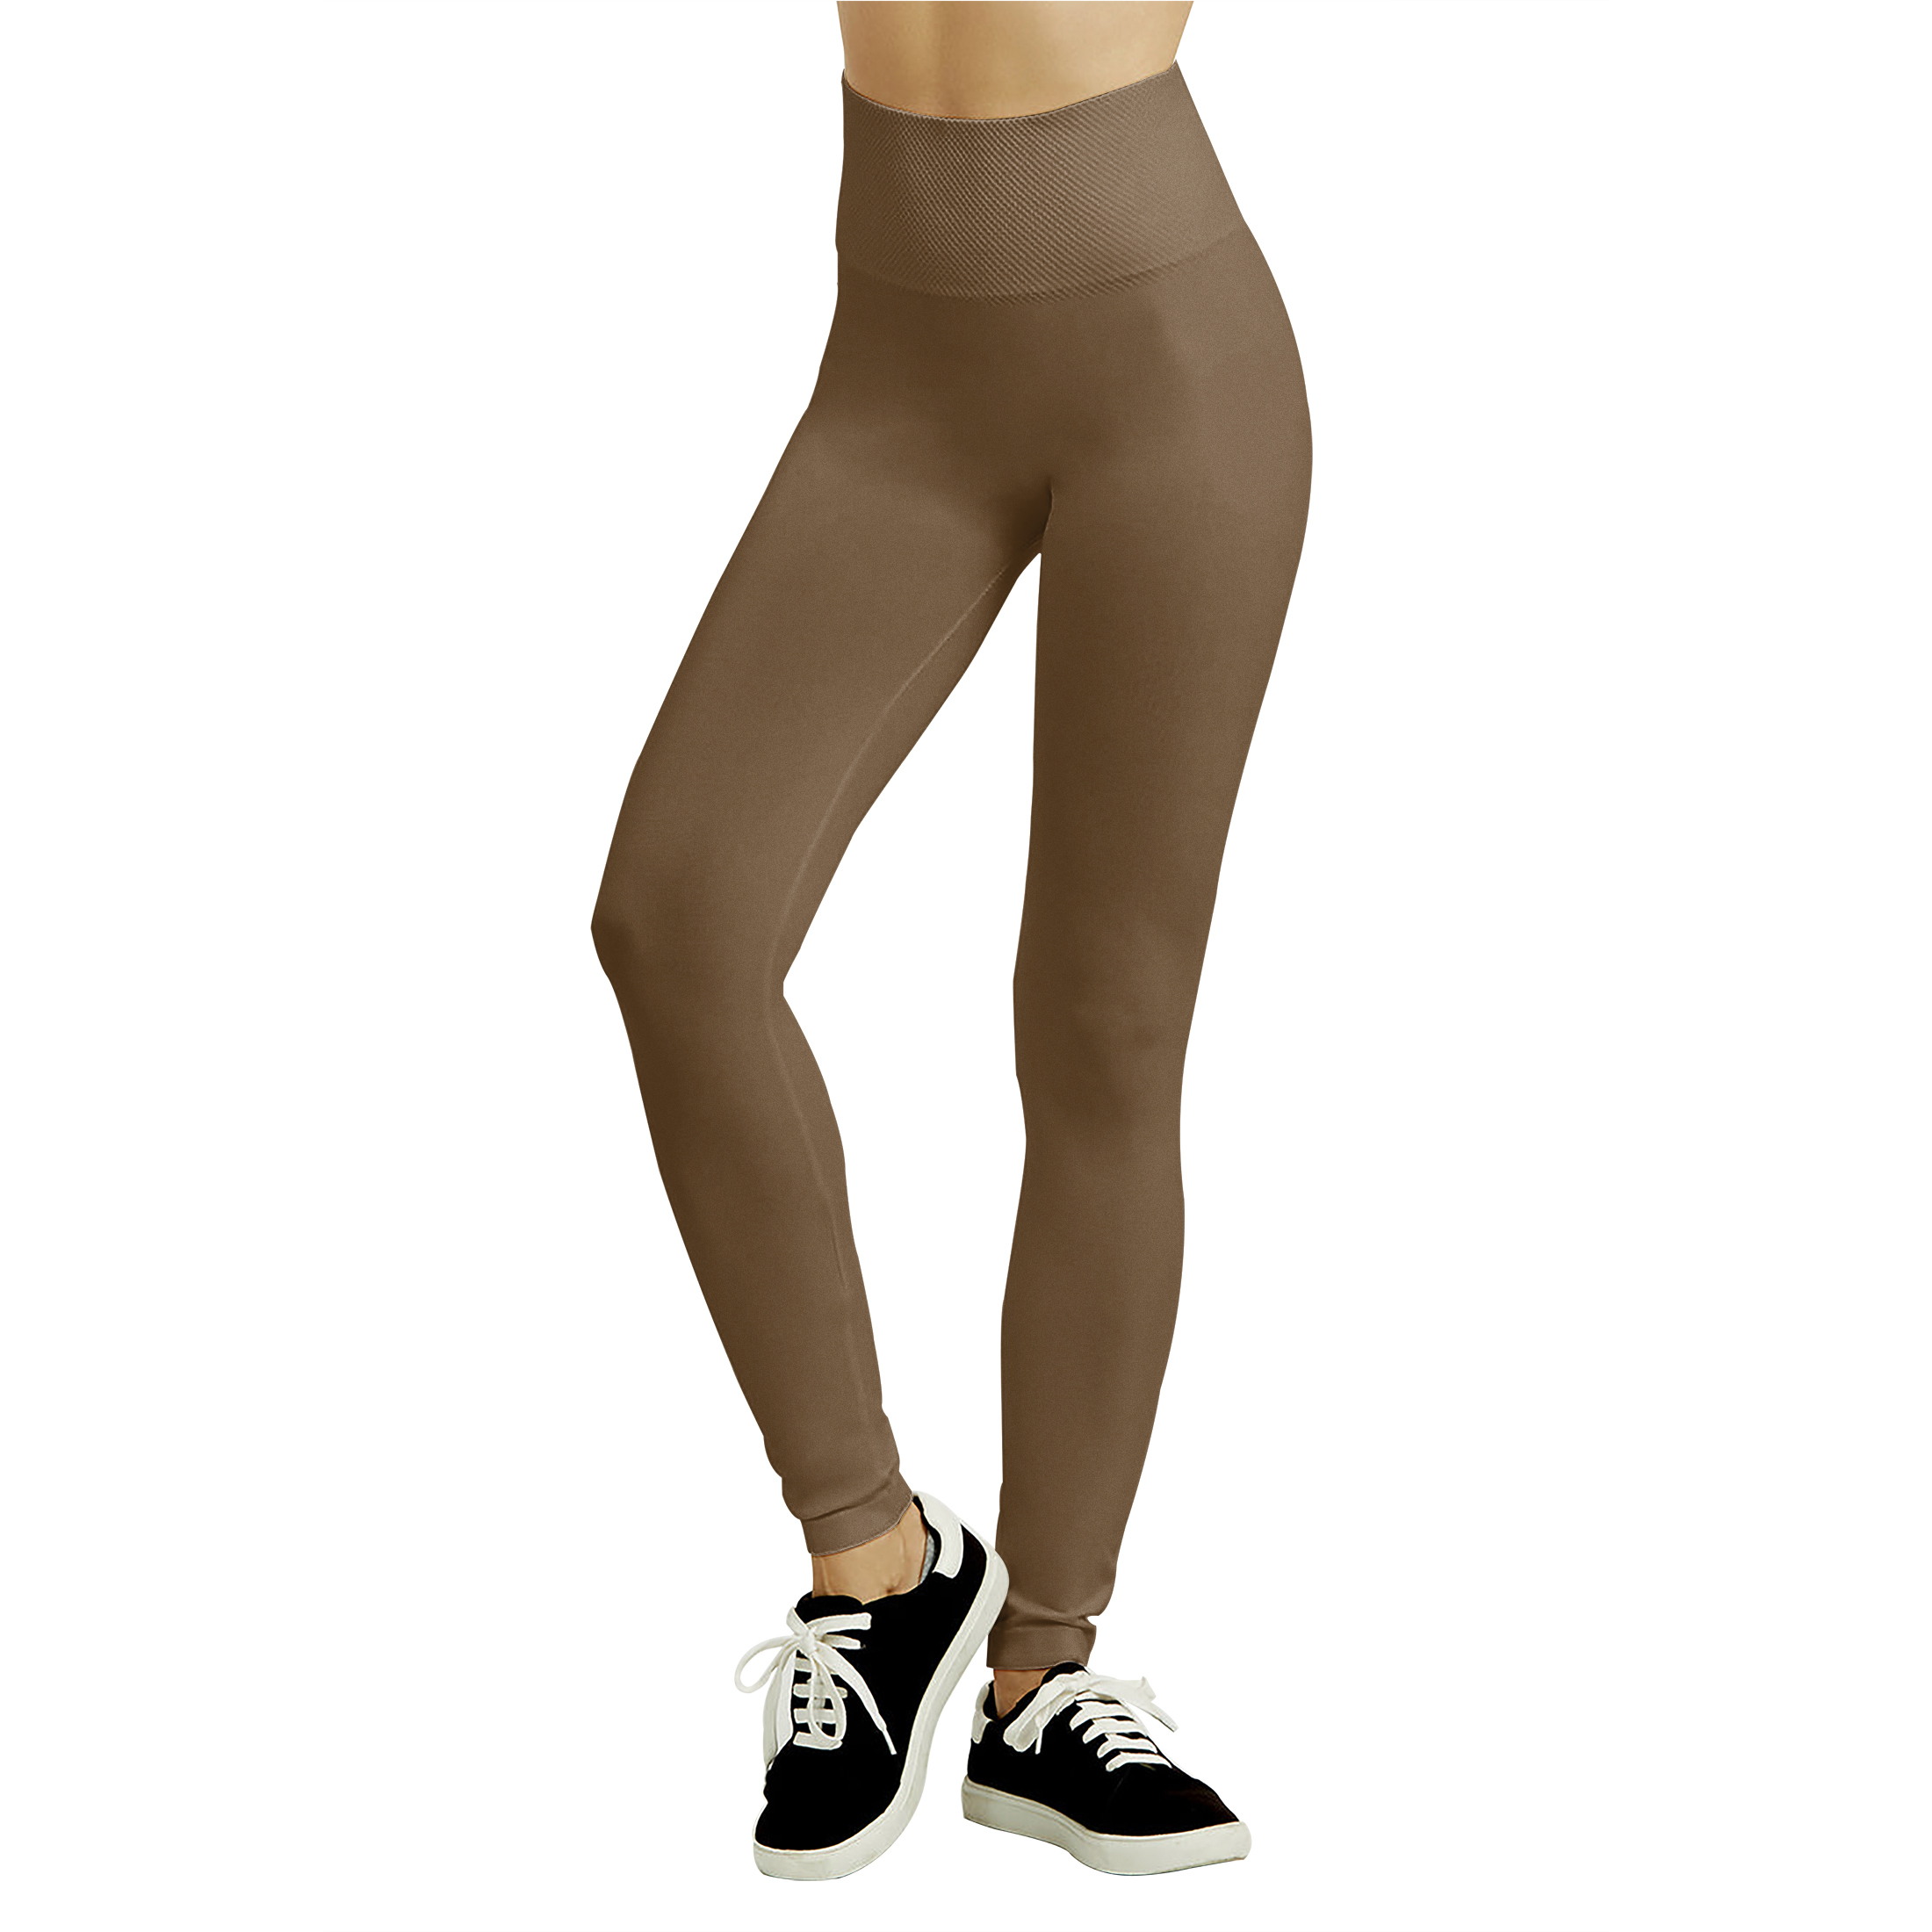 Women's Tummy Control Textured High Waist Workout Yoga Pants Leggings - Coffee, Small/Medium